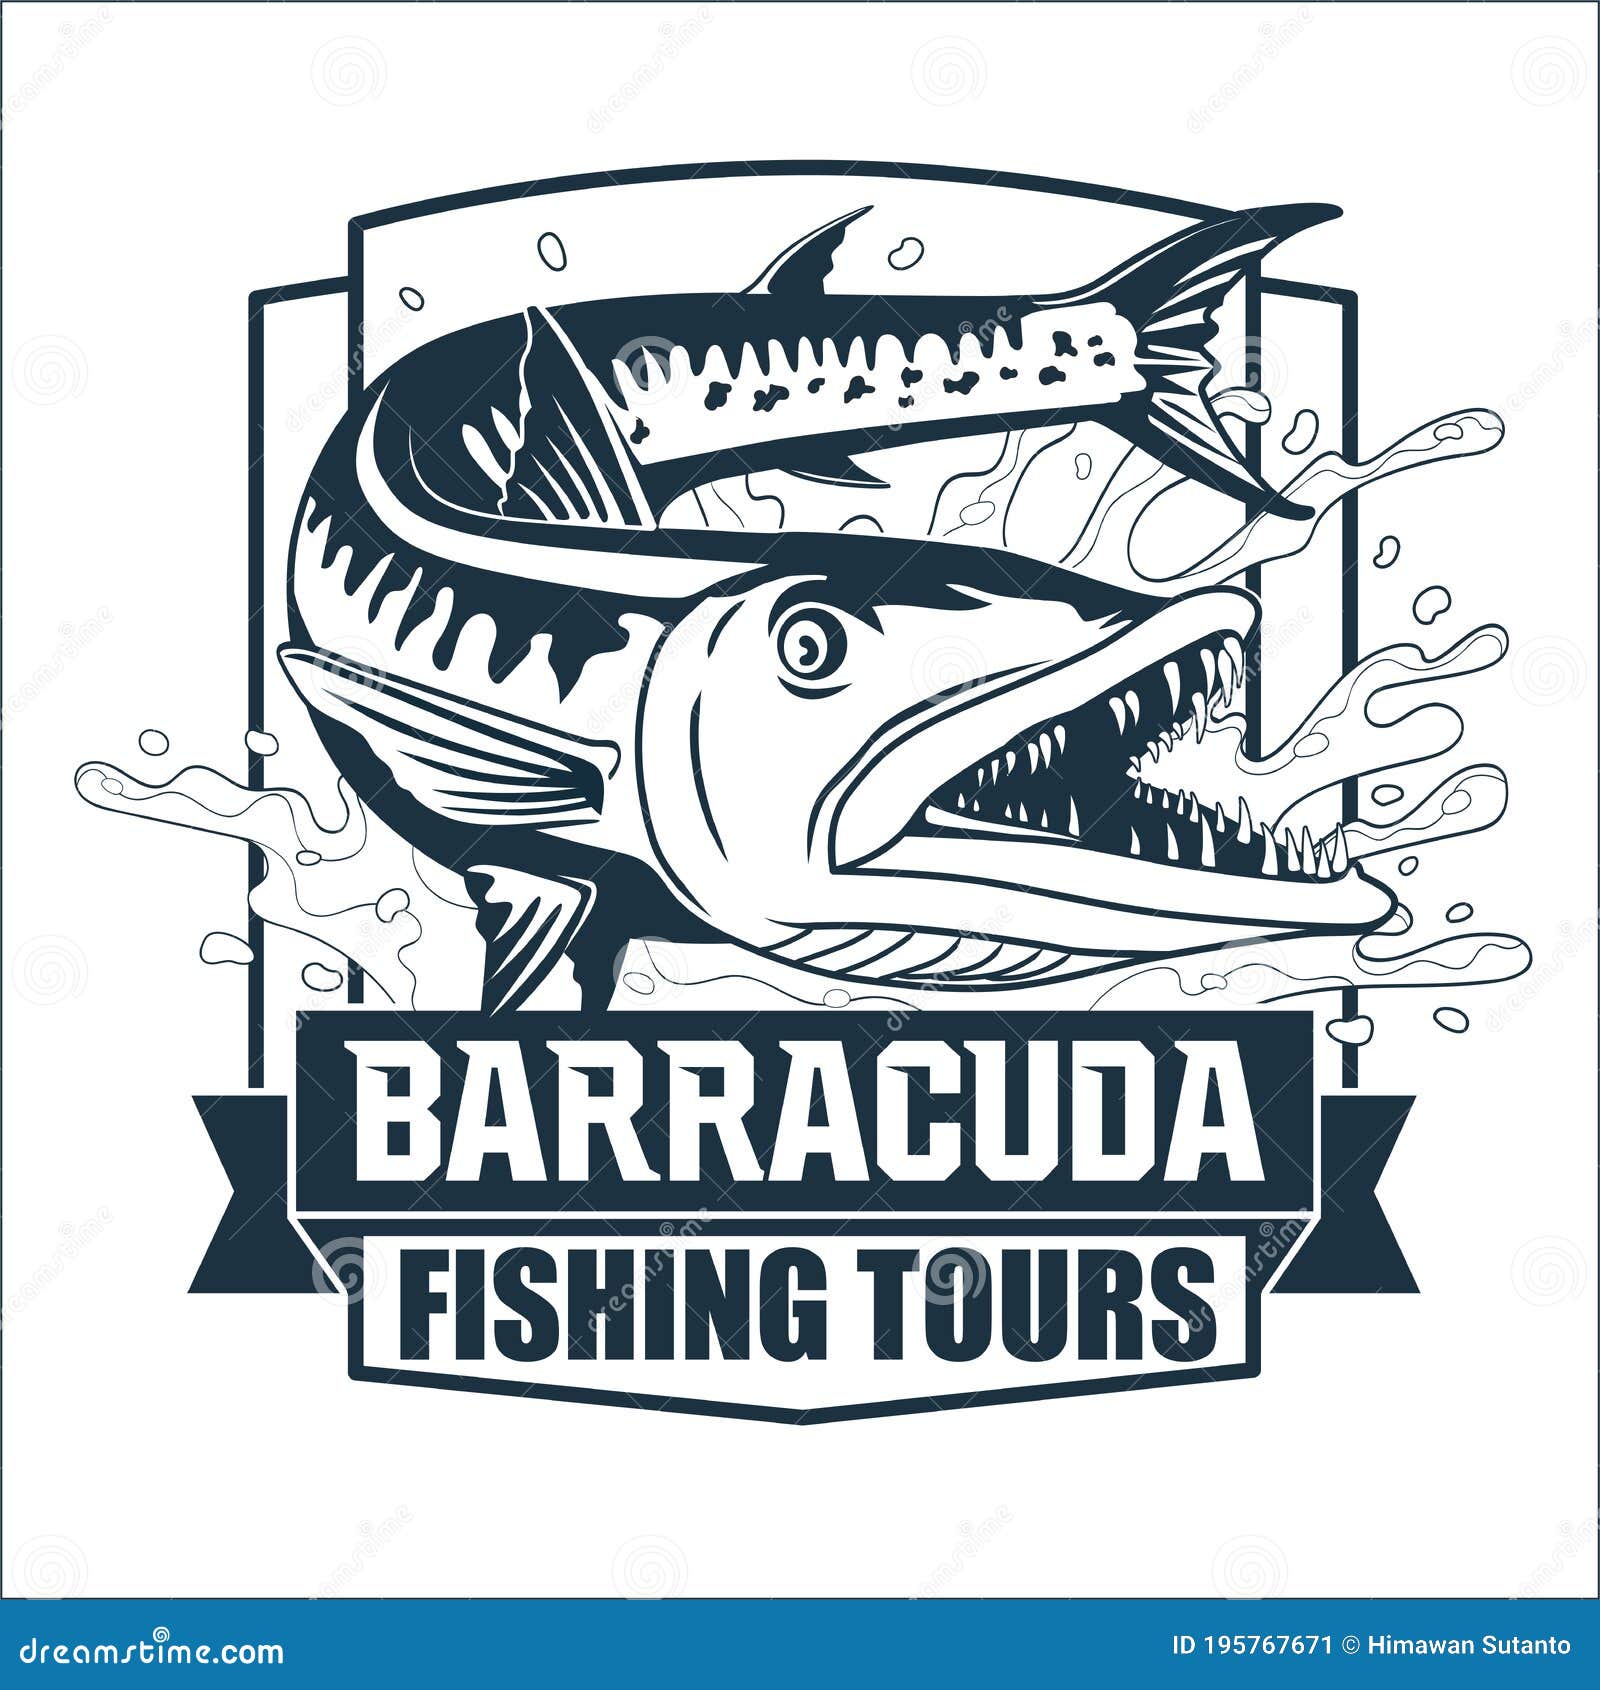 barracuda fishing challenge tours logo 